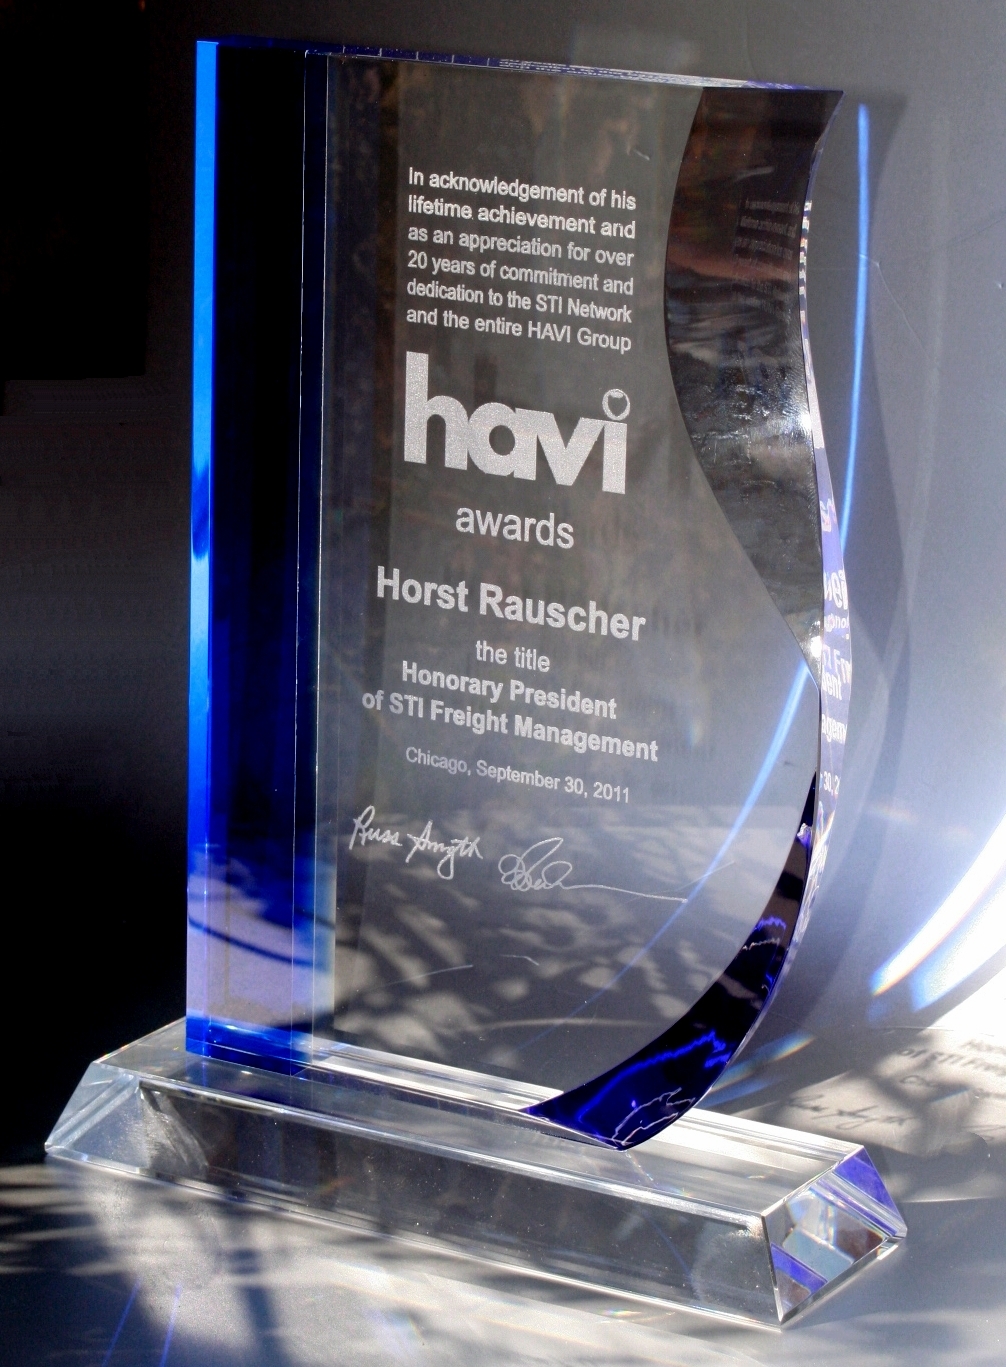 havi awards, Chicago